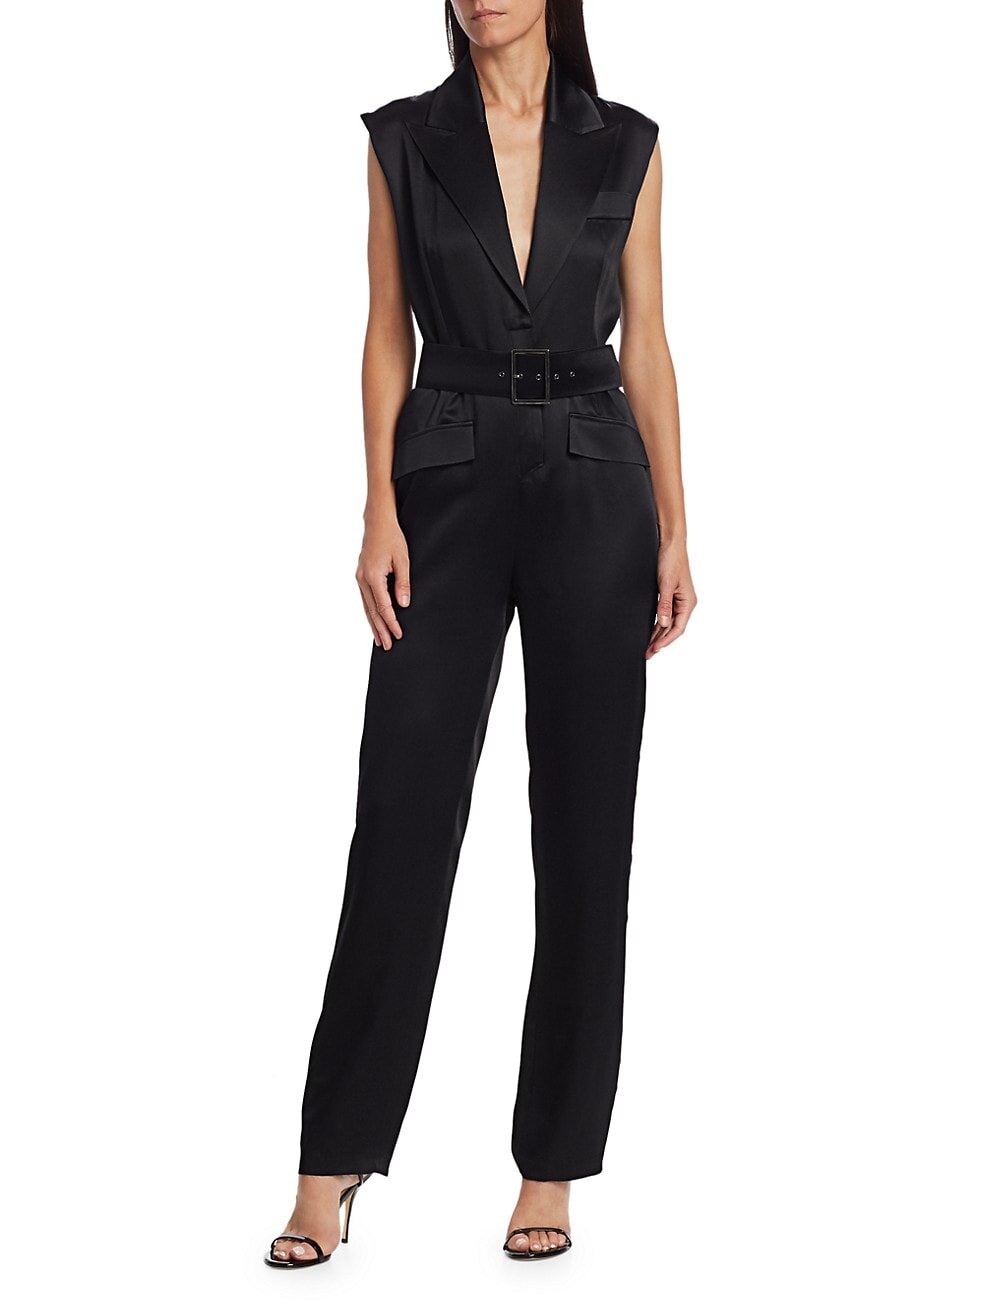 $599.99 Carolina Ritzler Belted Tuxedo Jumpsuit - Saks Off 5th